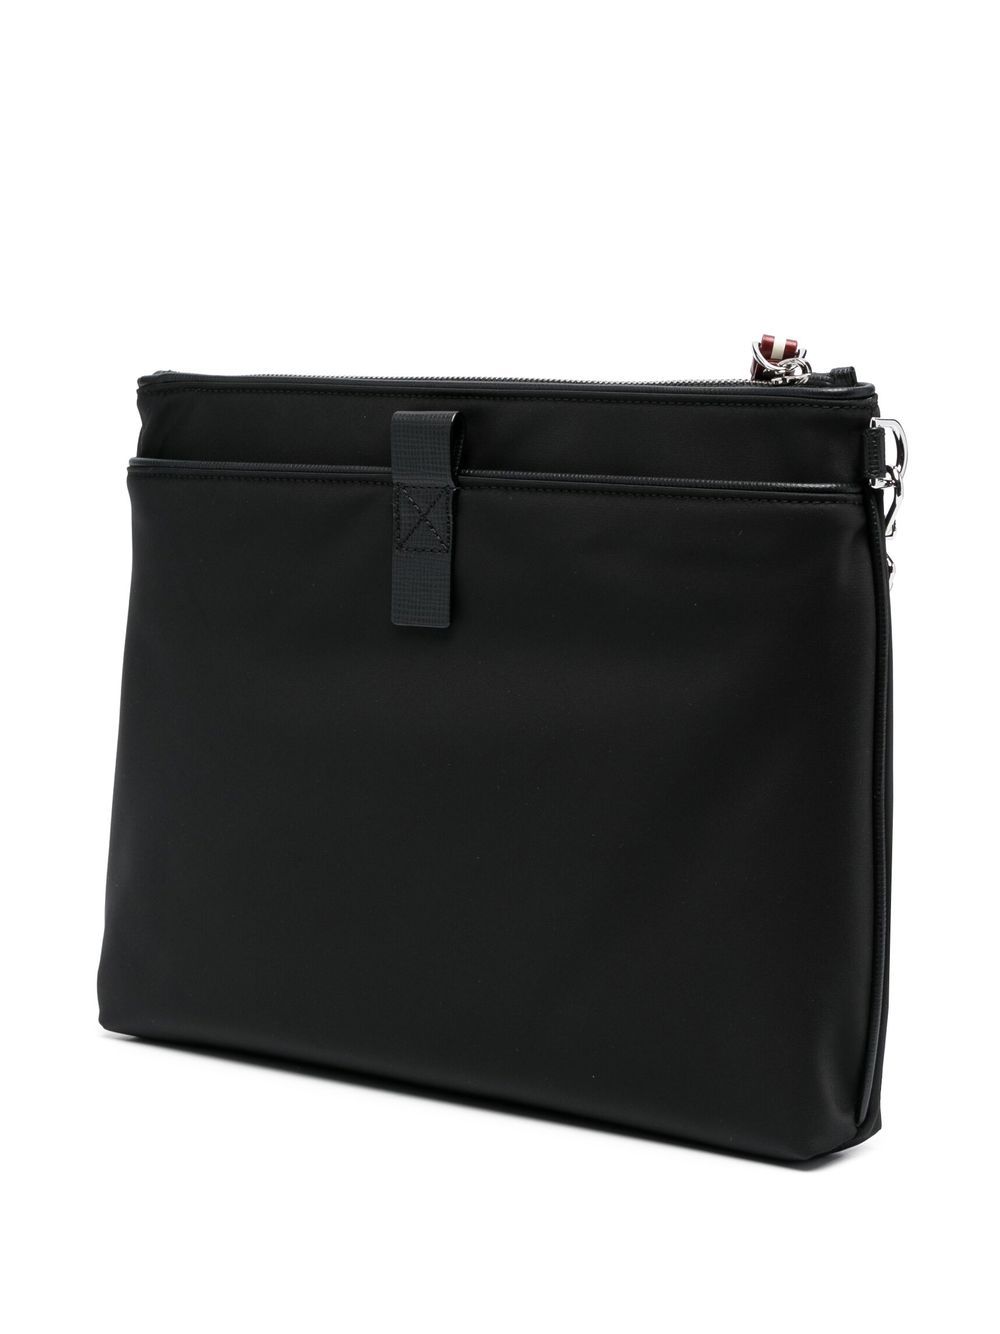 Bally Fholler Clutch Bag In Black | ModeSens